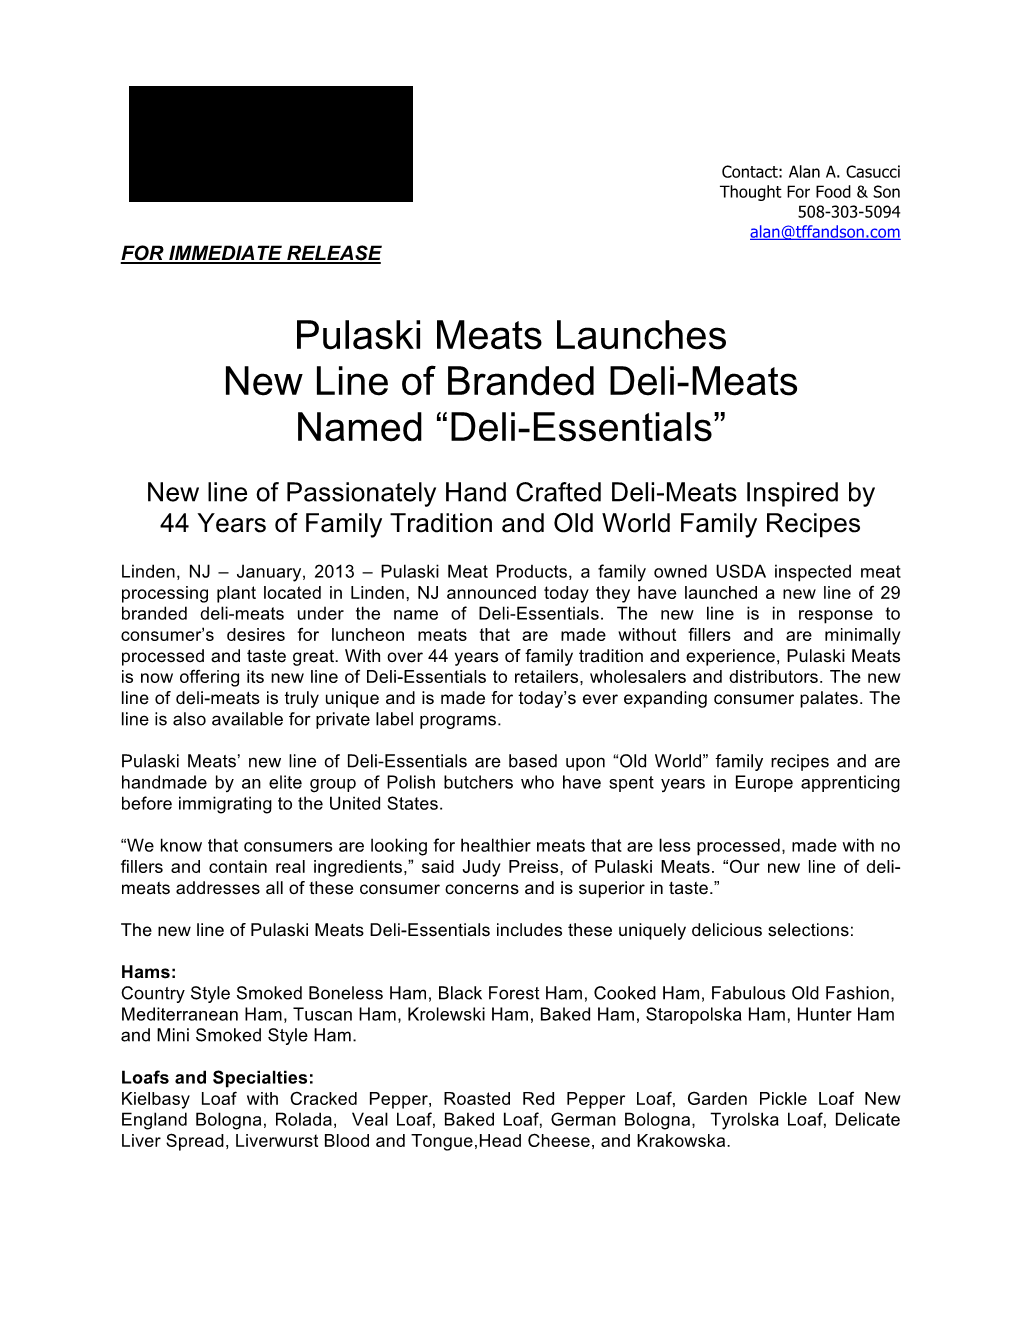 Pulaski Meats Launches New Line of Branded Deli-Meats Named “Deli-Essentials”